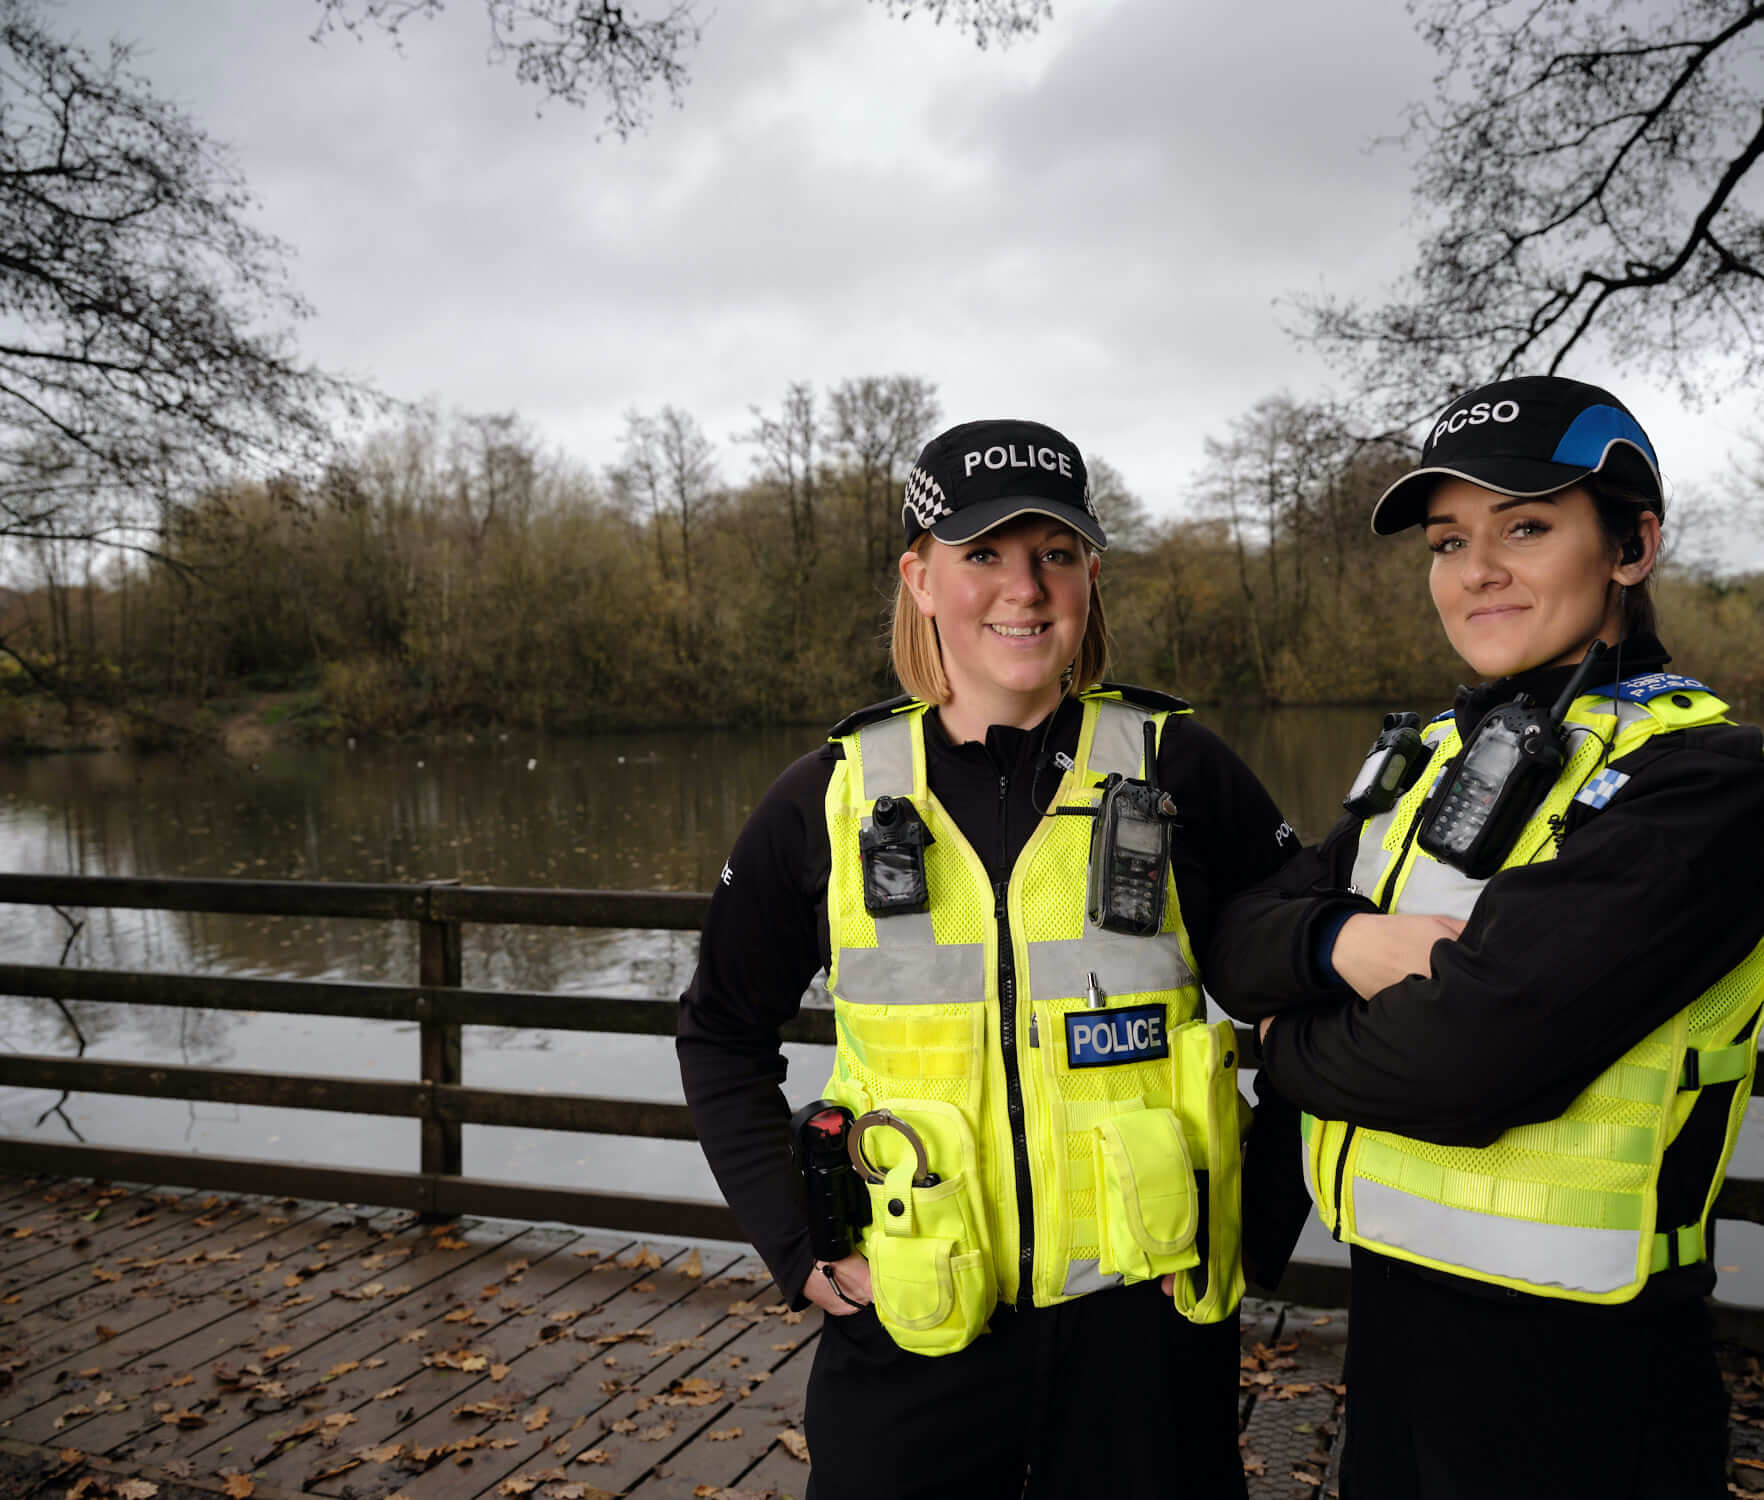 Derbyshire police jobs local jobs listings